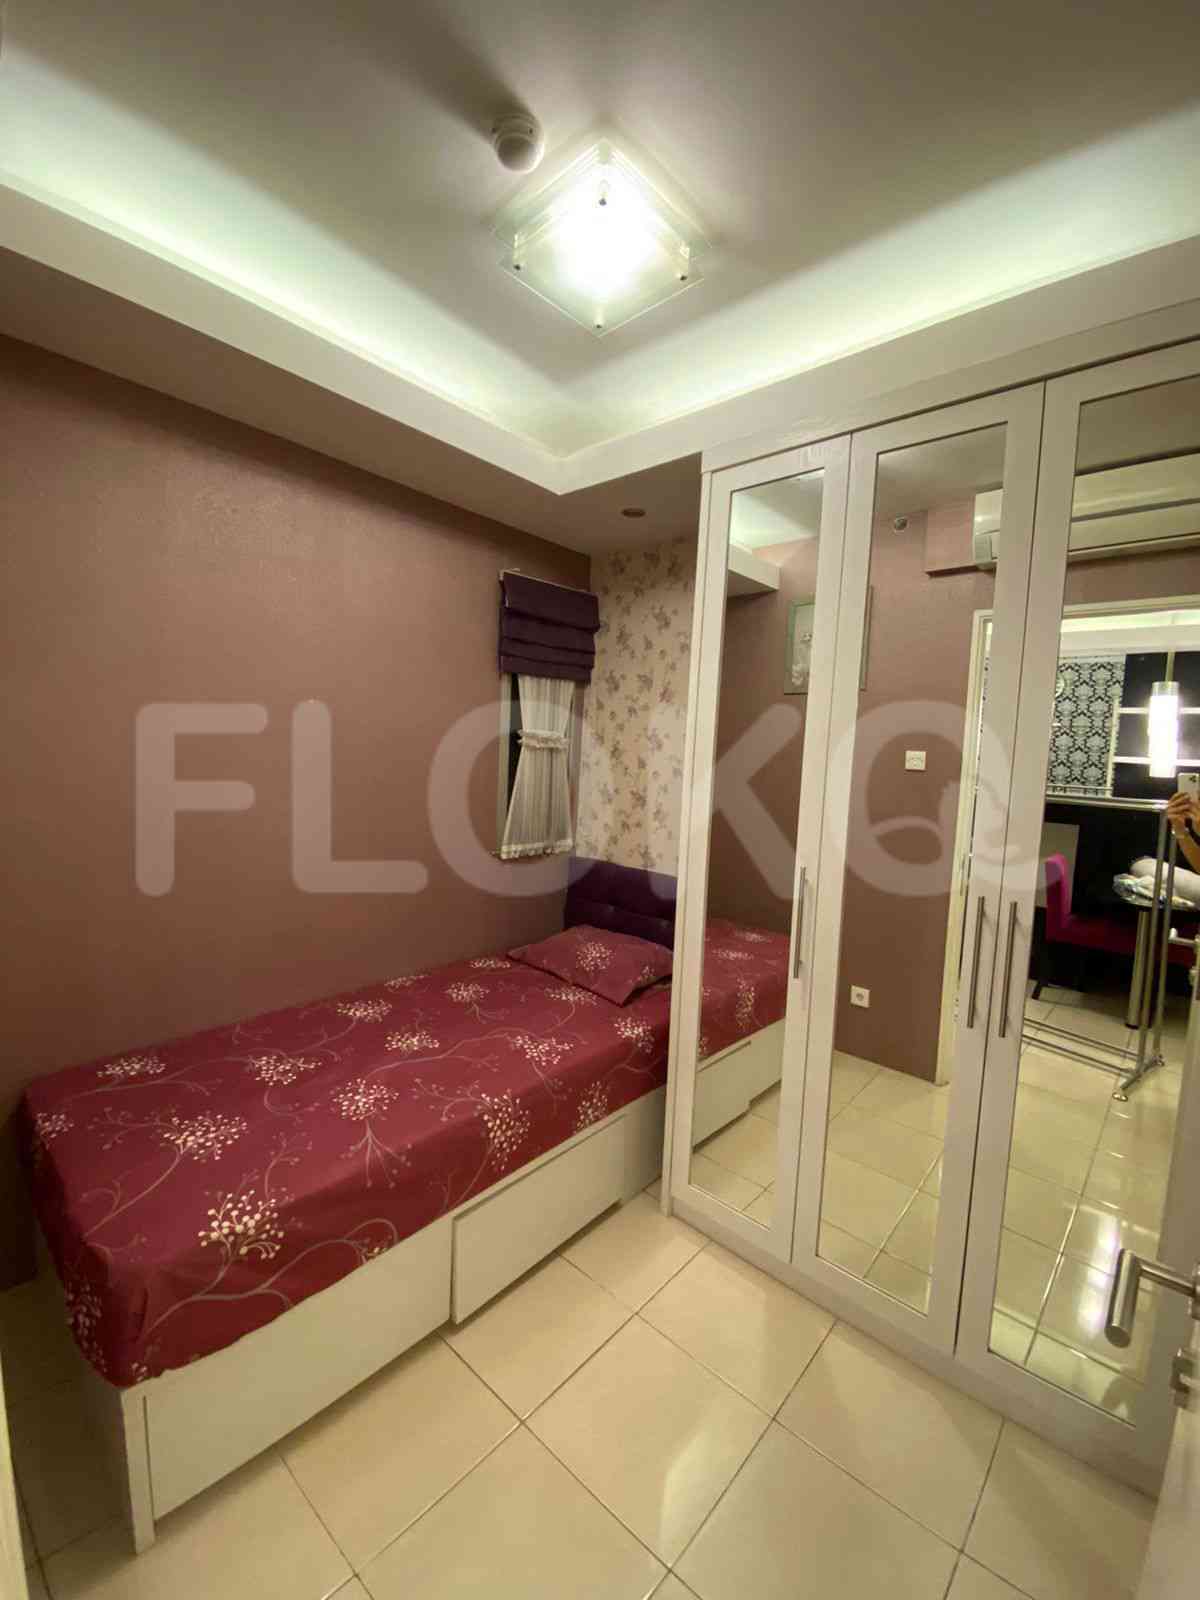 2 Bedroom on 11th Floor for Rent in Pakubuwono Terrace - fga3cc 4